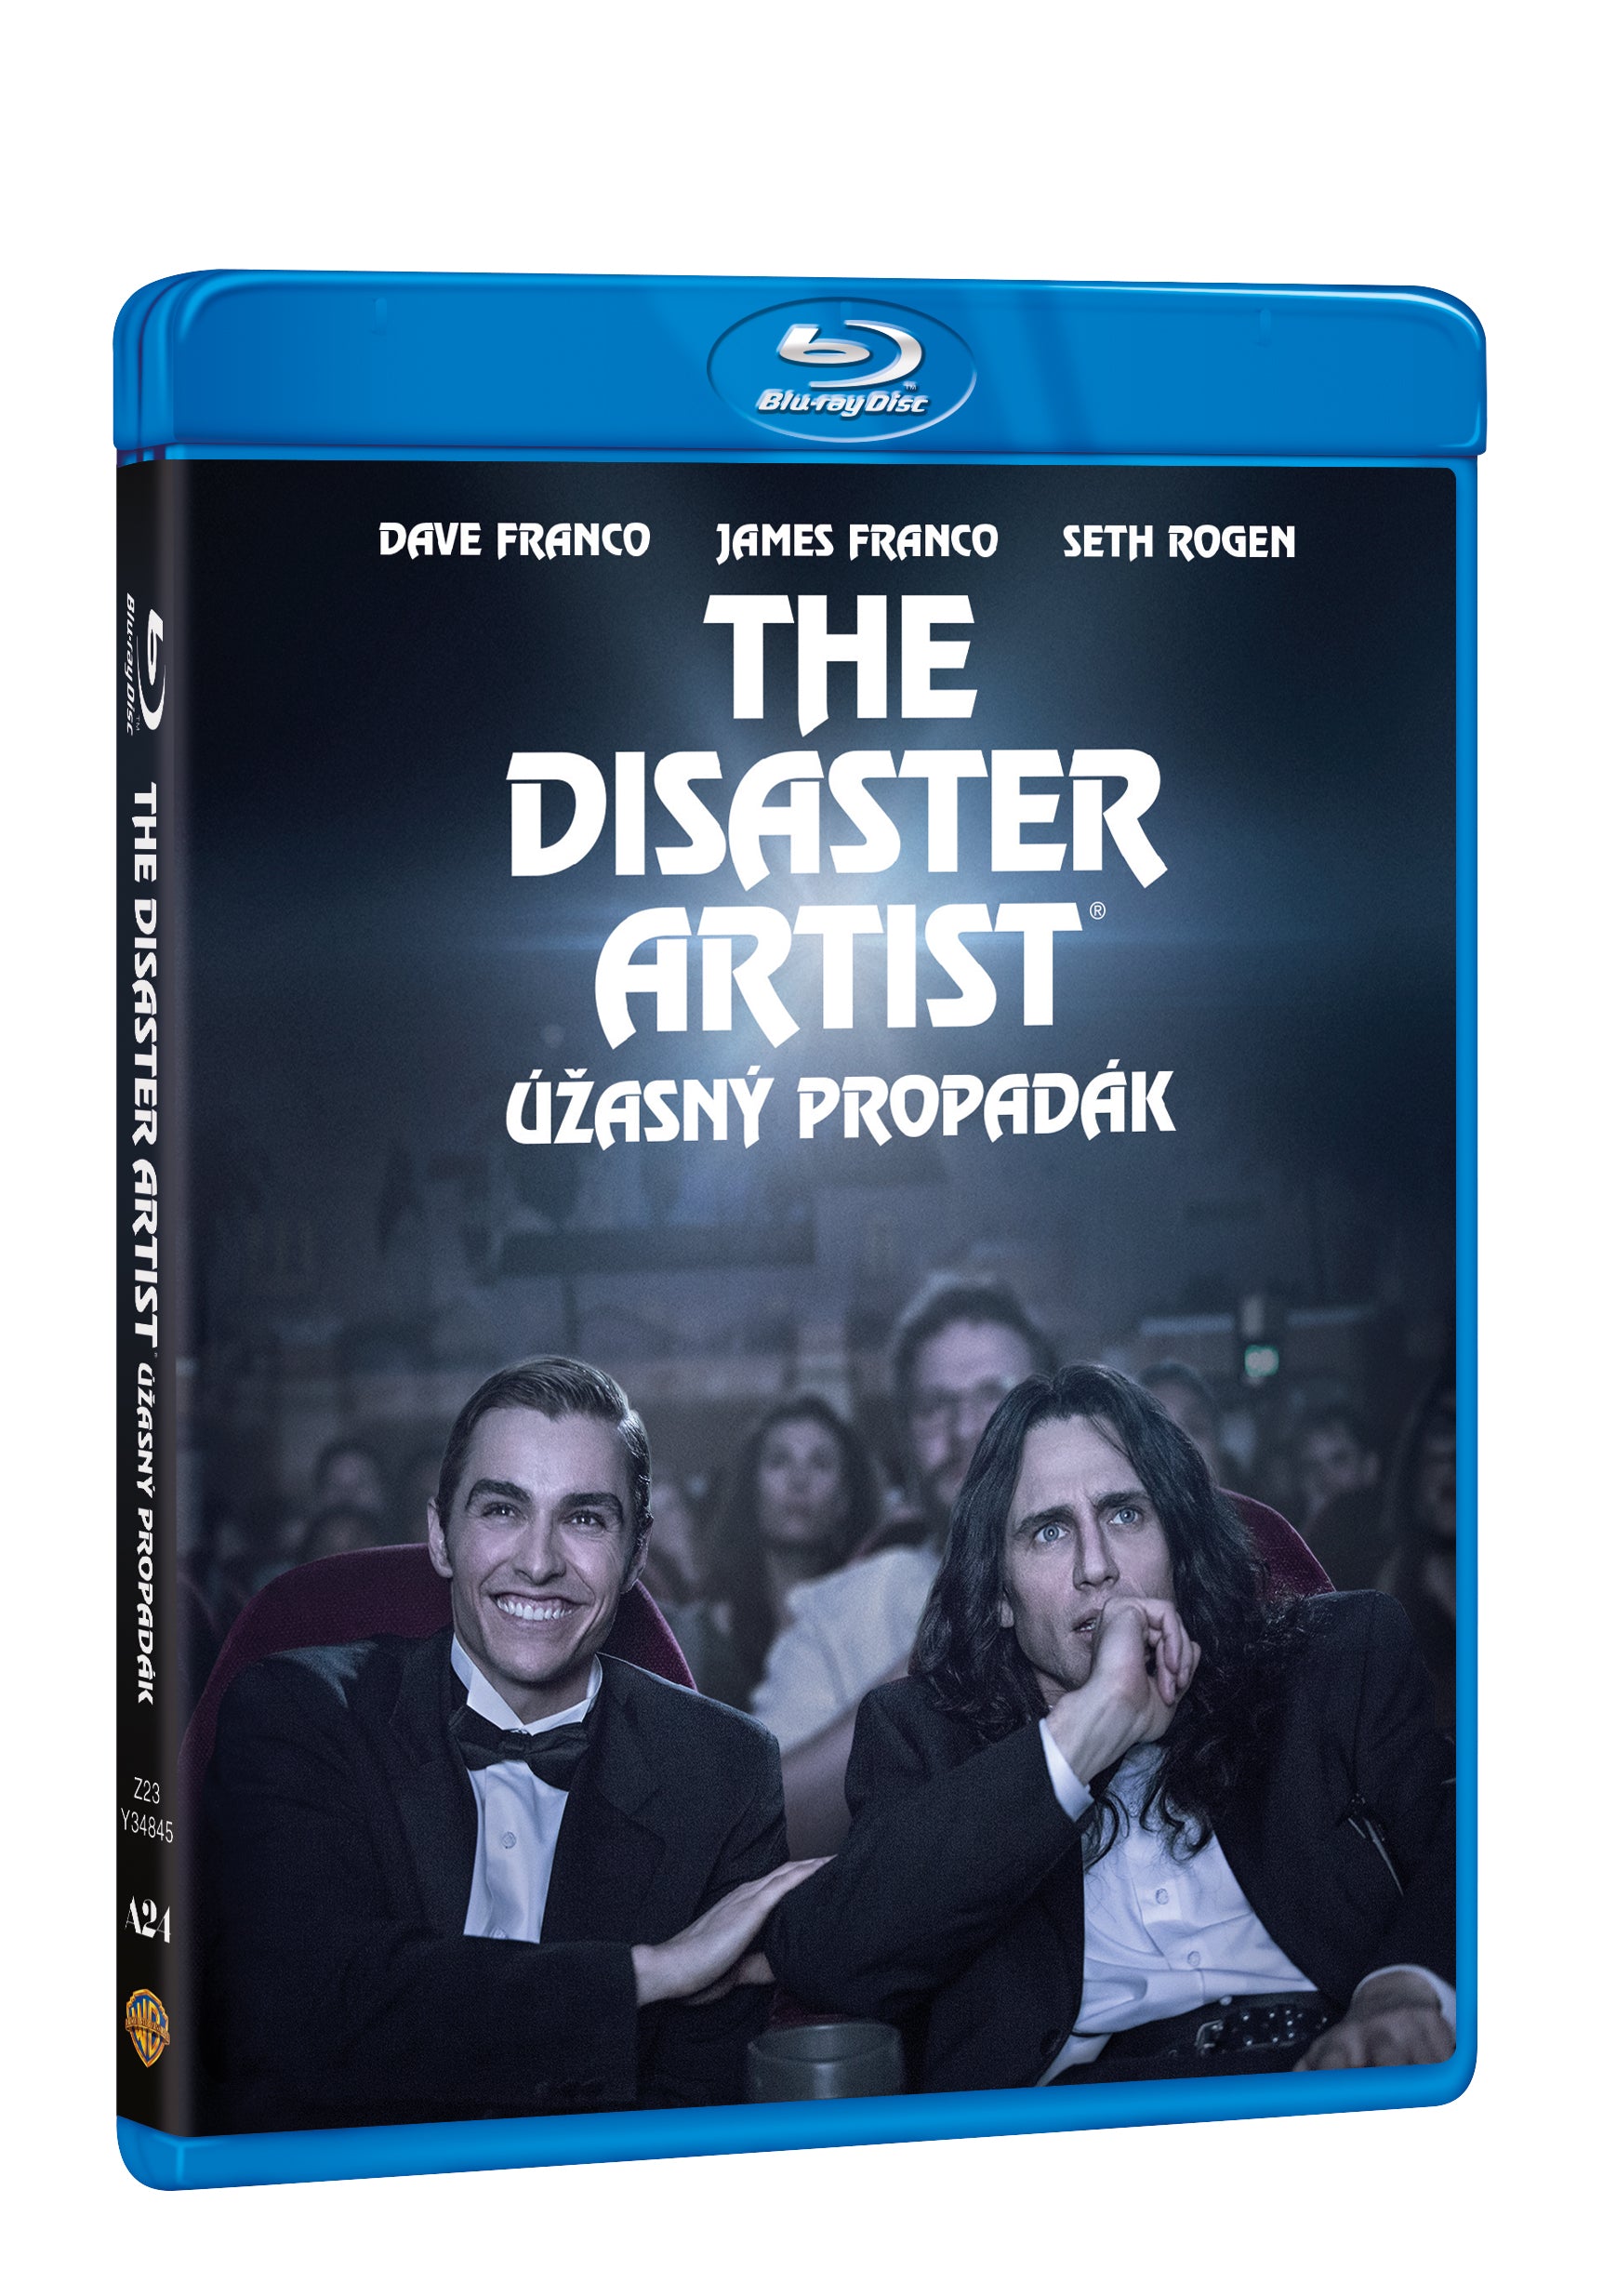 The Disaster Artist: Uzasny propadak BD / The Disaster Artist - Czech version